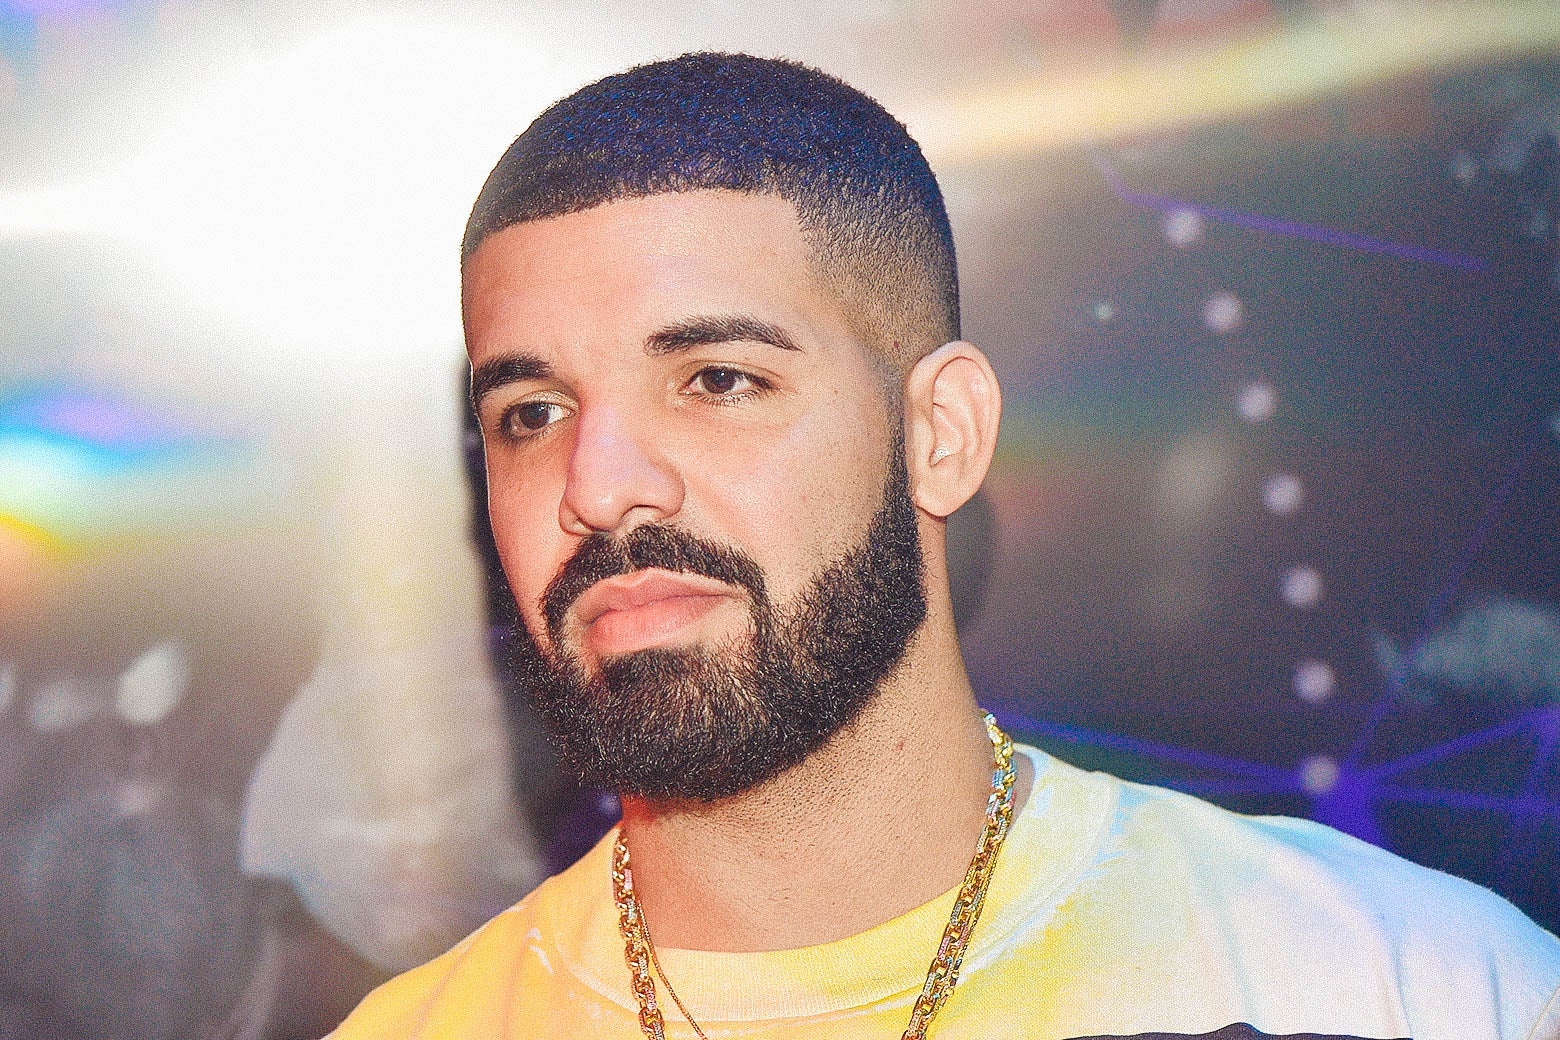 Drake shows off new braided hairstyle in Instagram selfies | Cedidollar